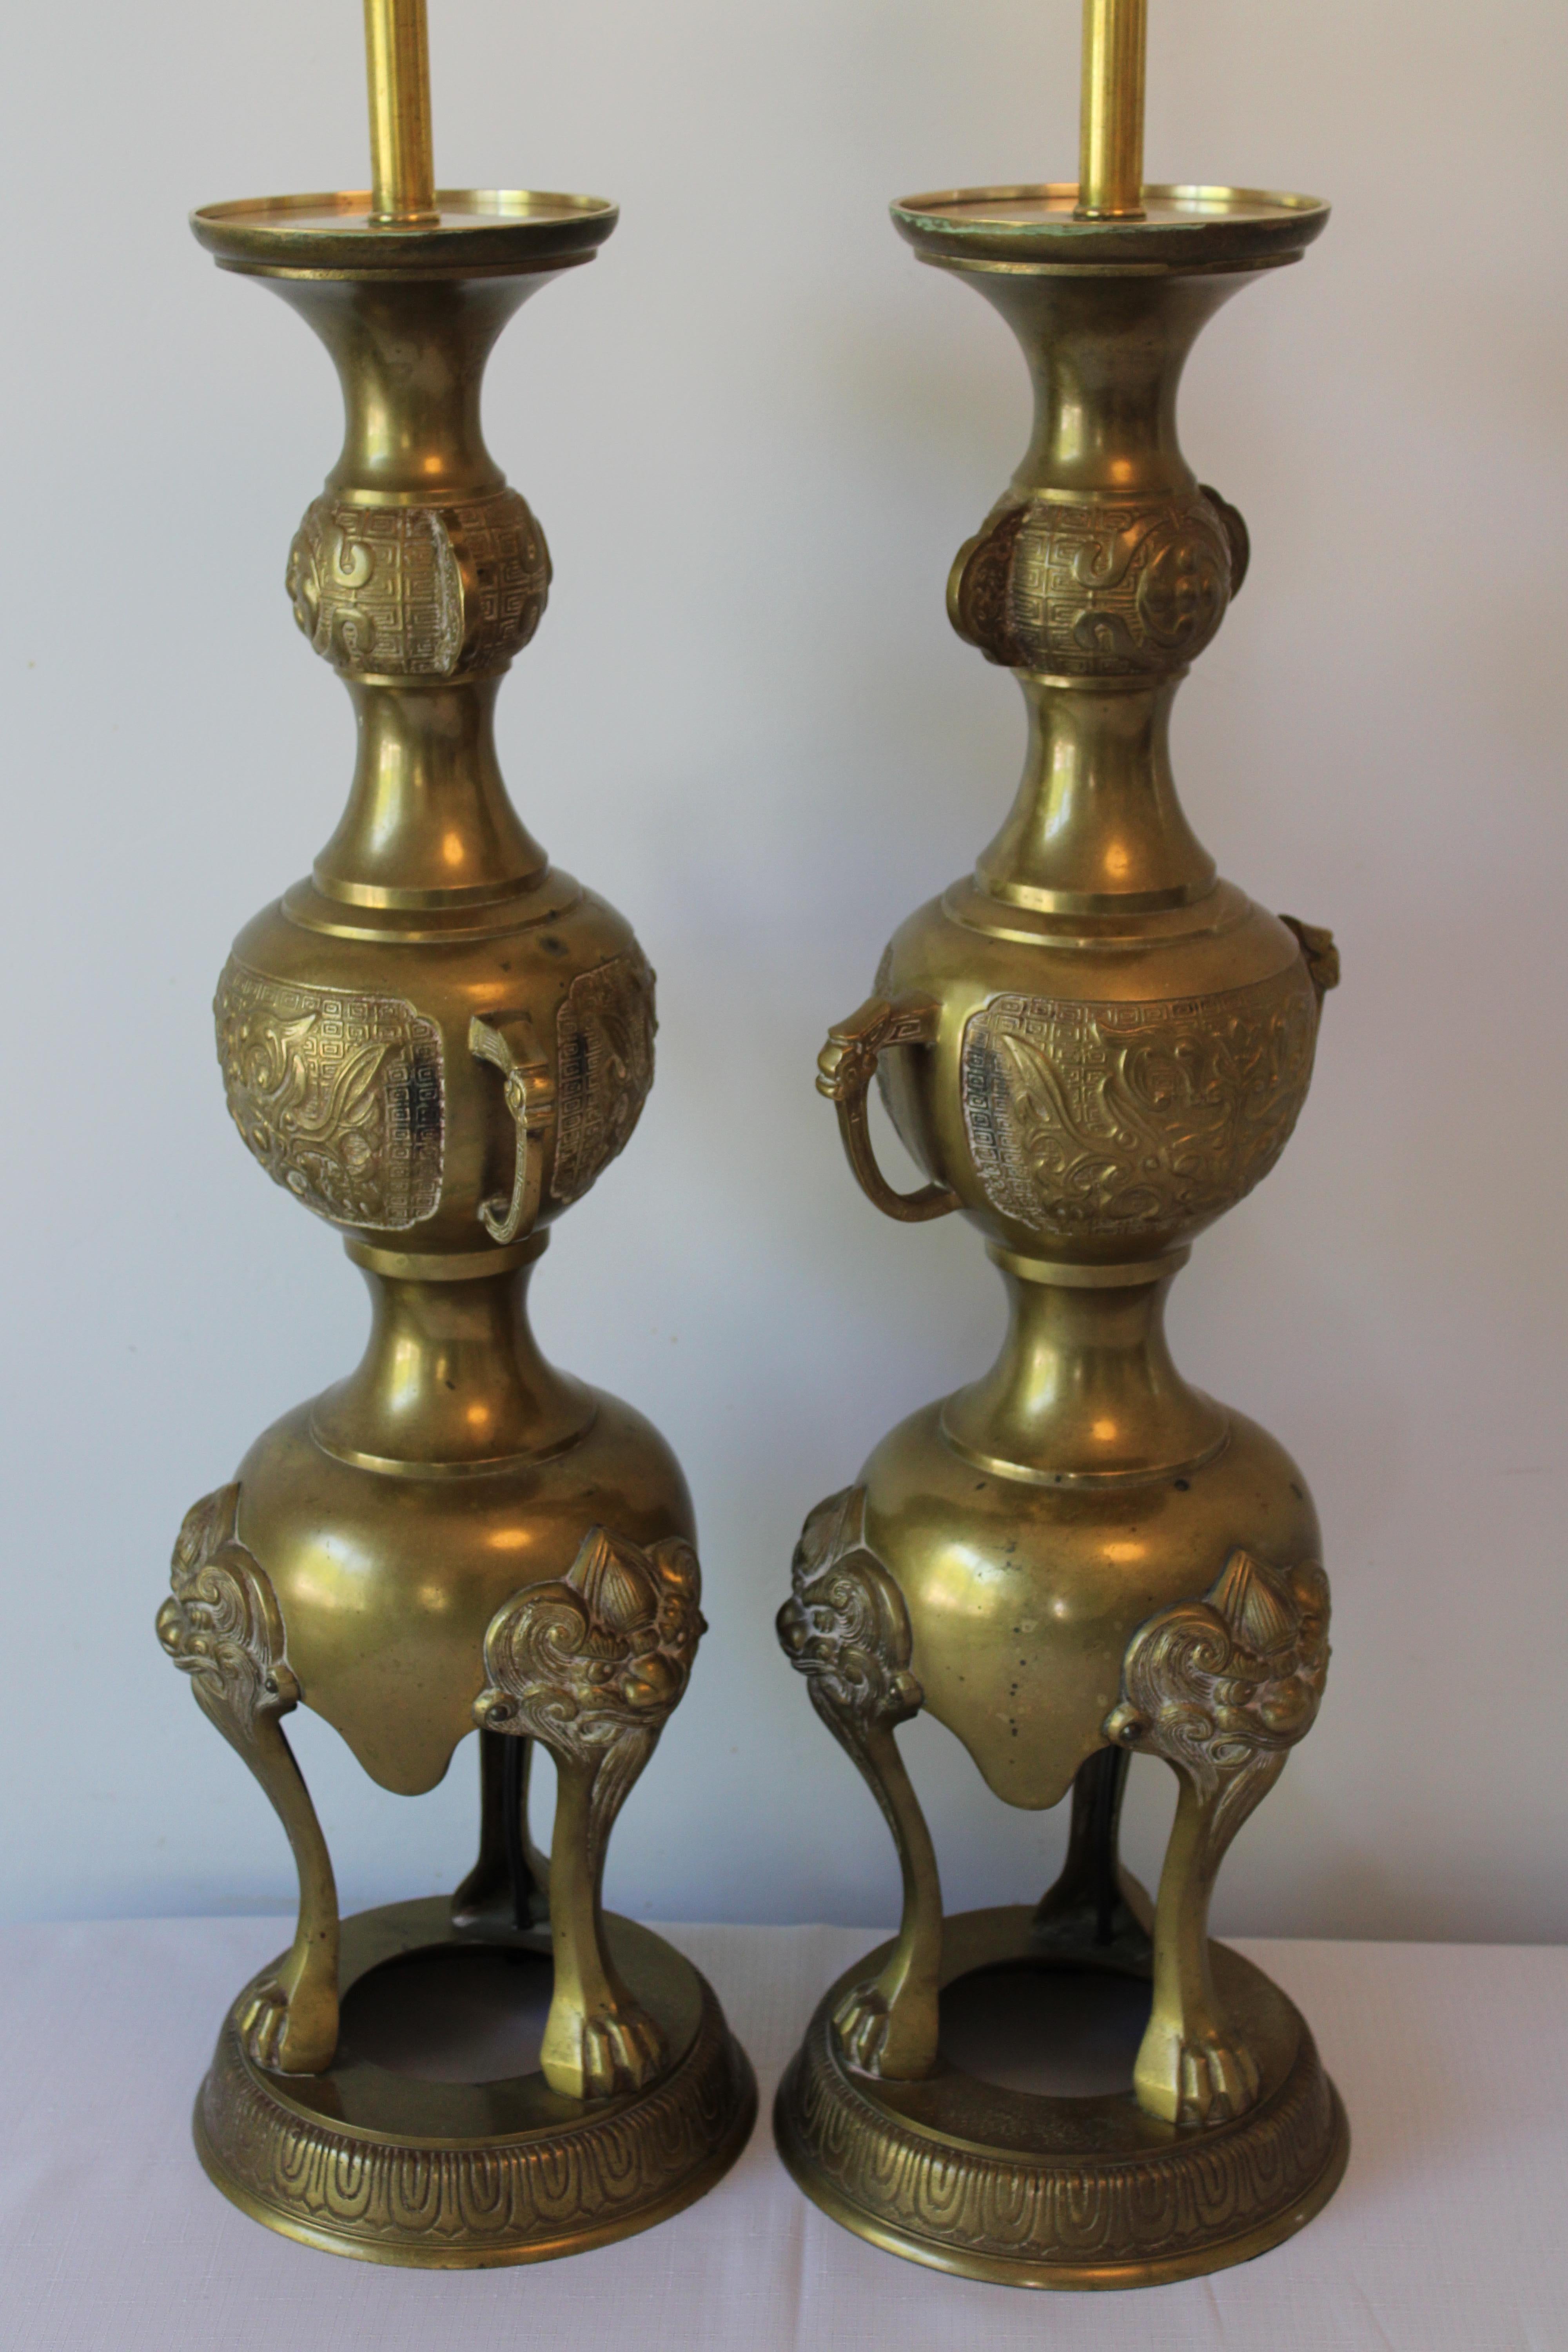 Pair of Moroccan Moorish brass lamps. Lamps measure 30.5